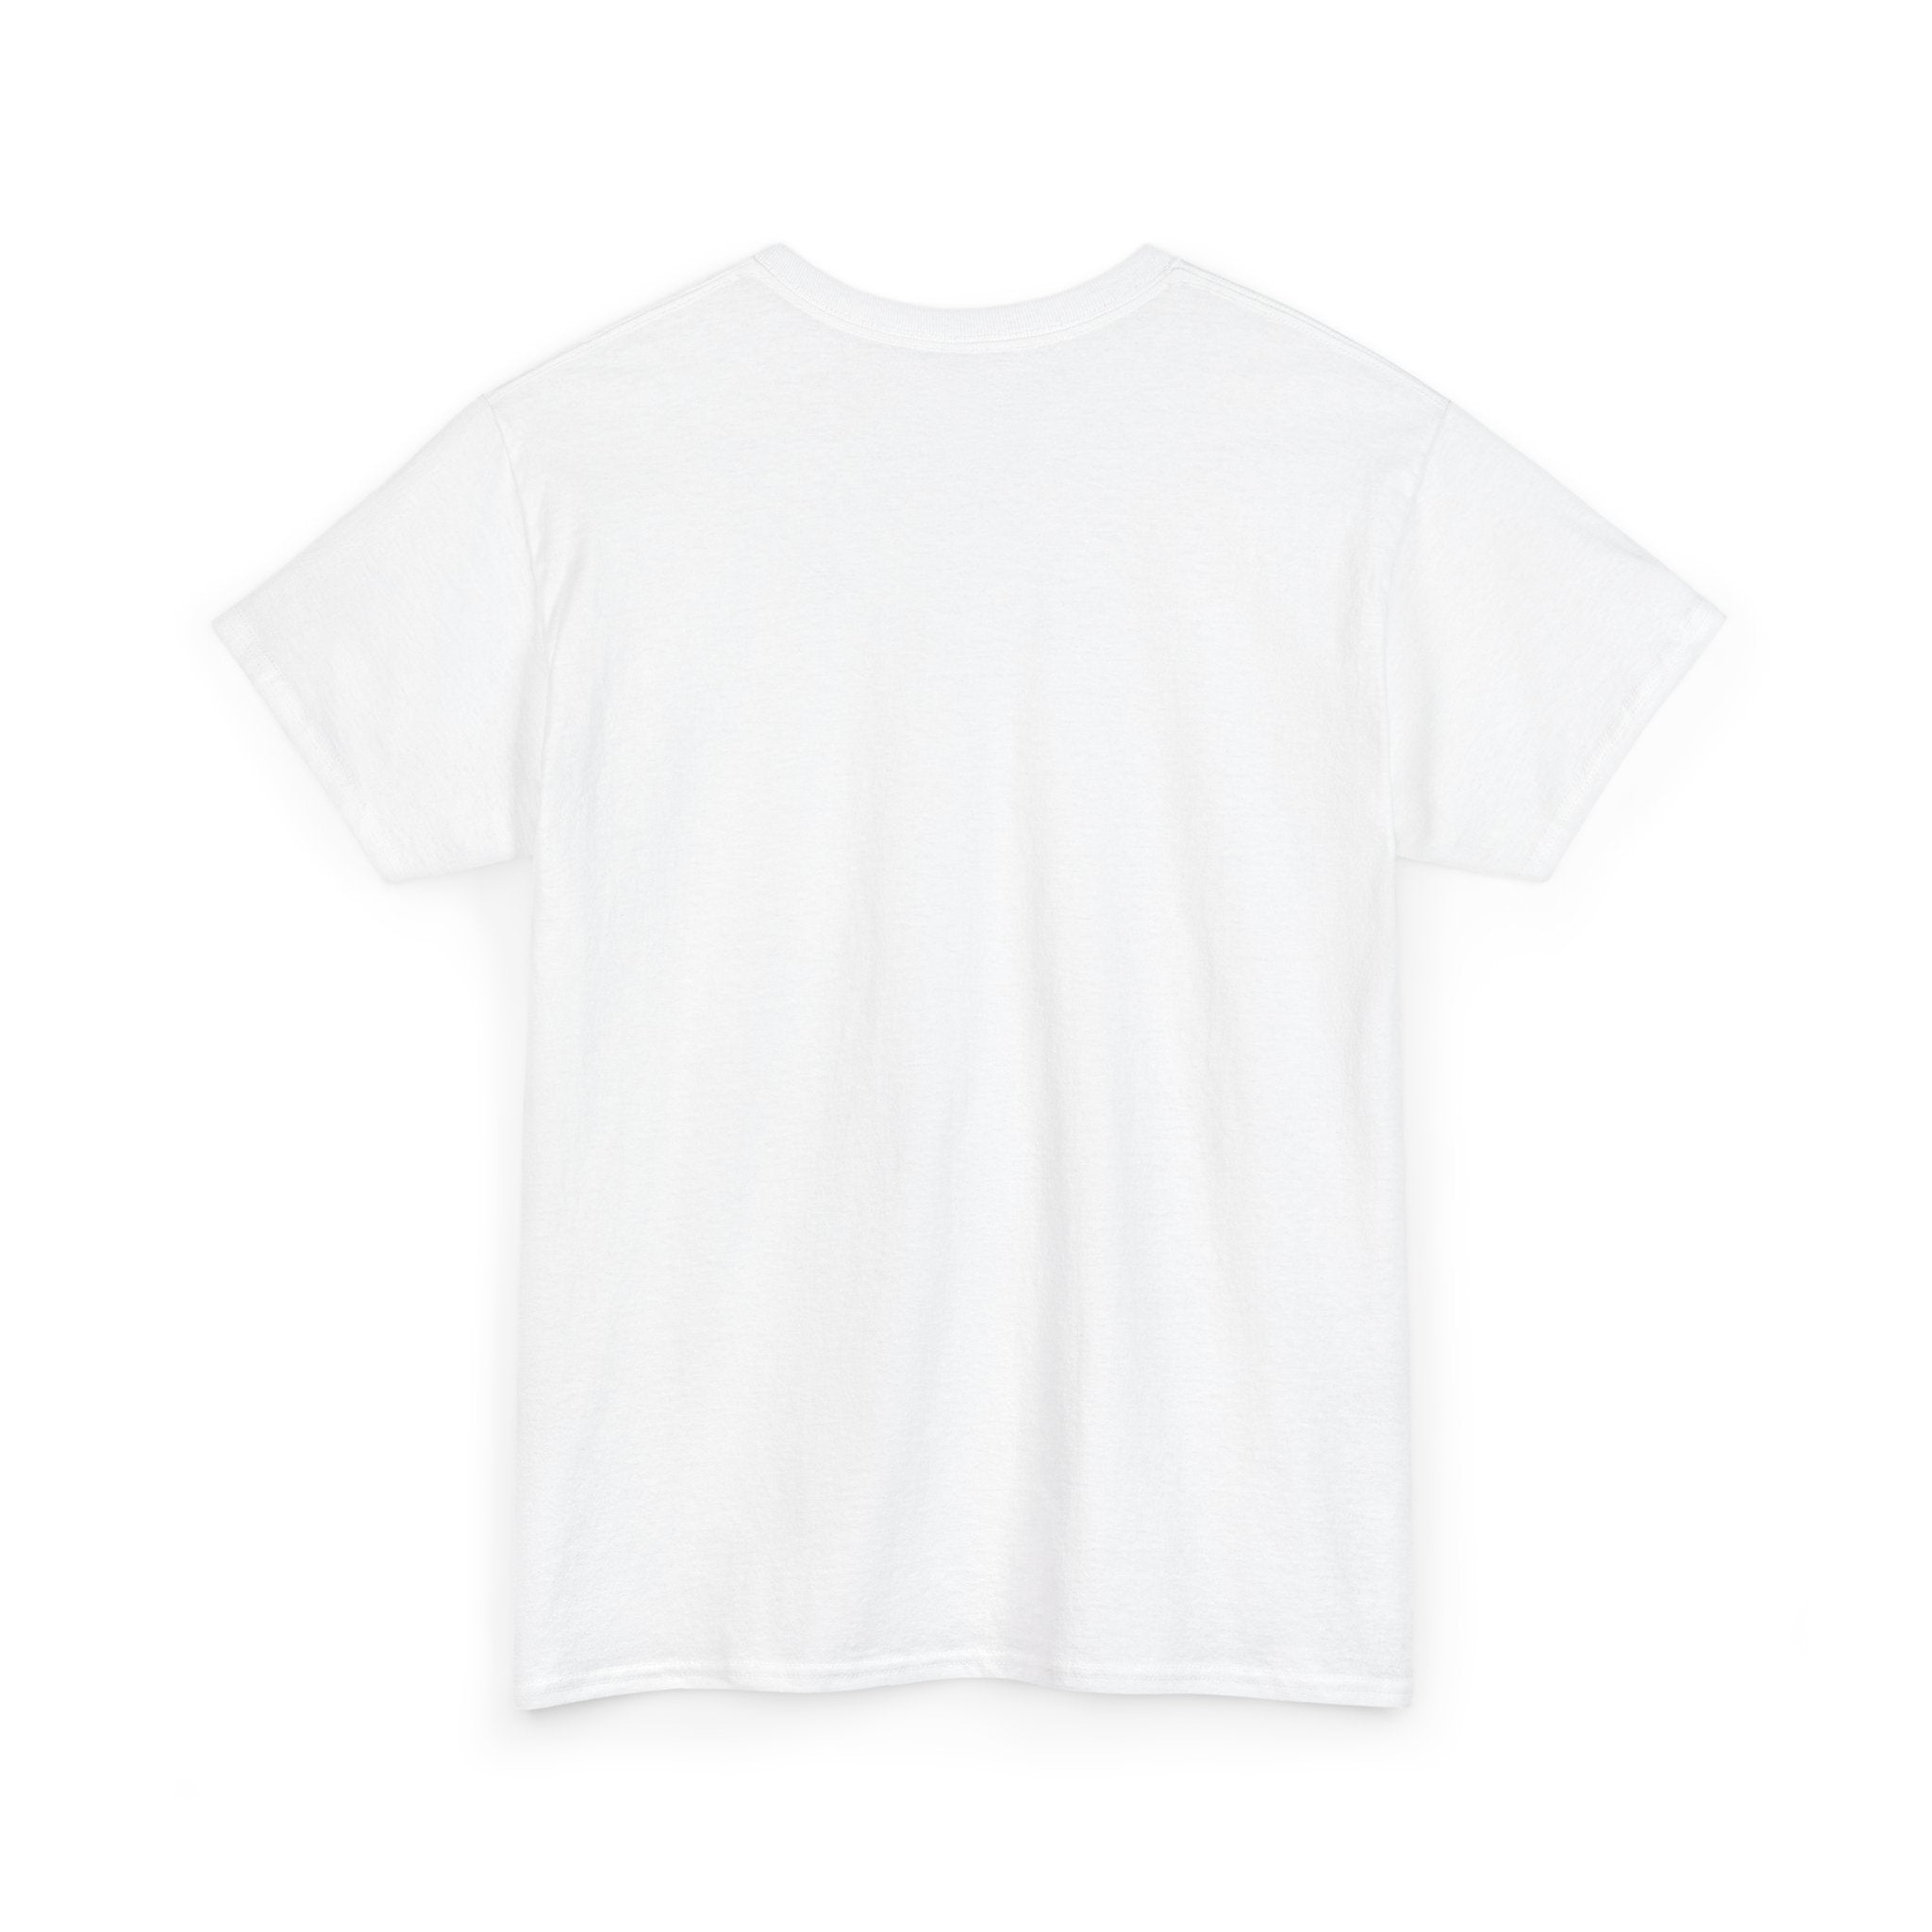 Travis Scott T-Shirt